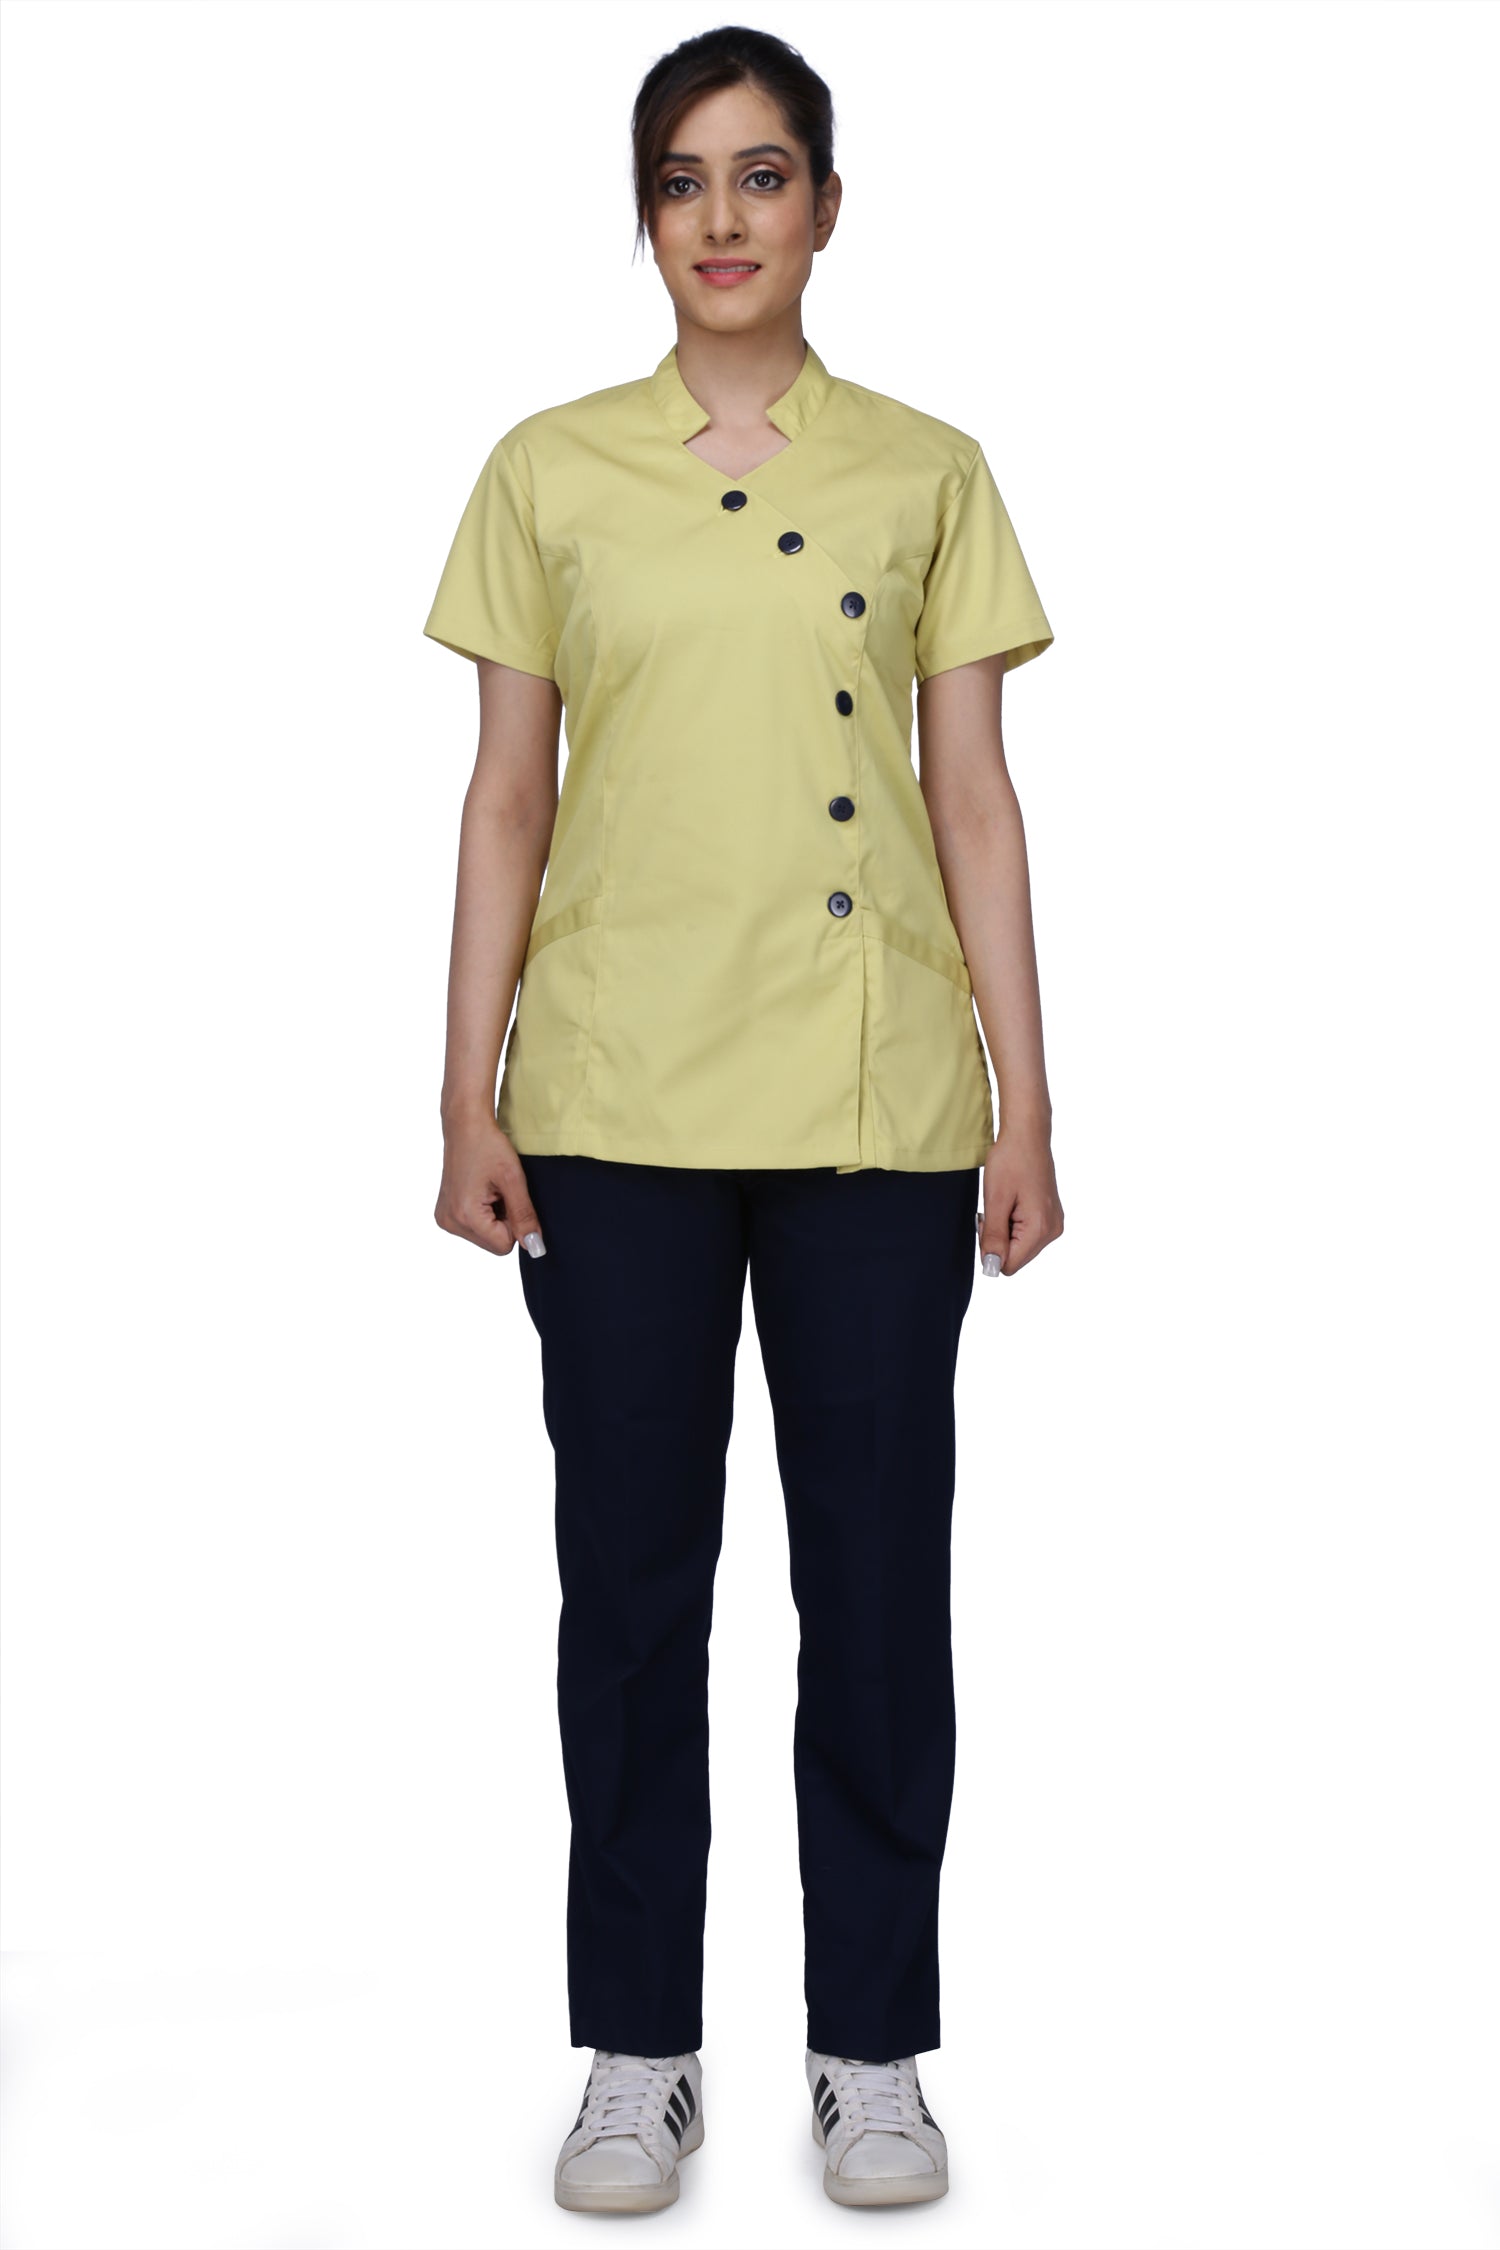 Female Nurse Uniform NT09 | Uniform Craft